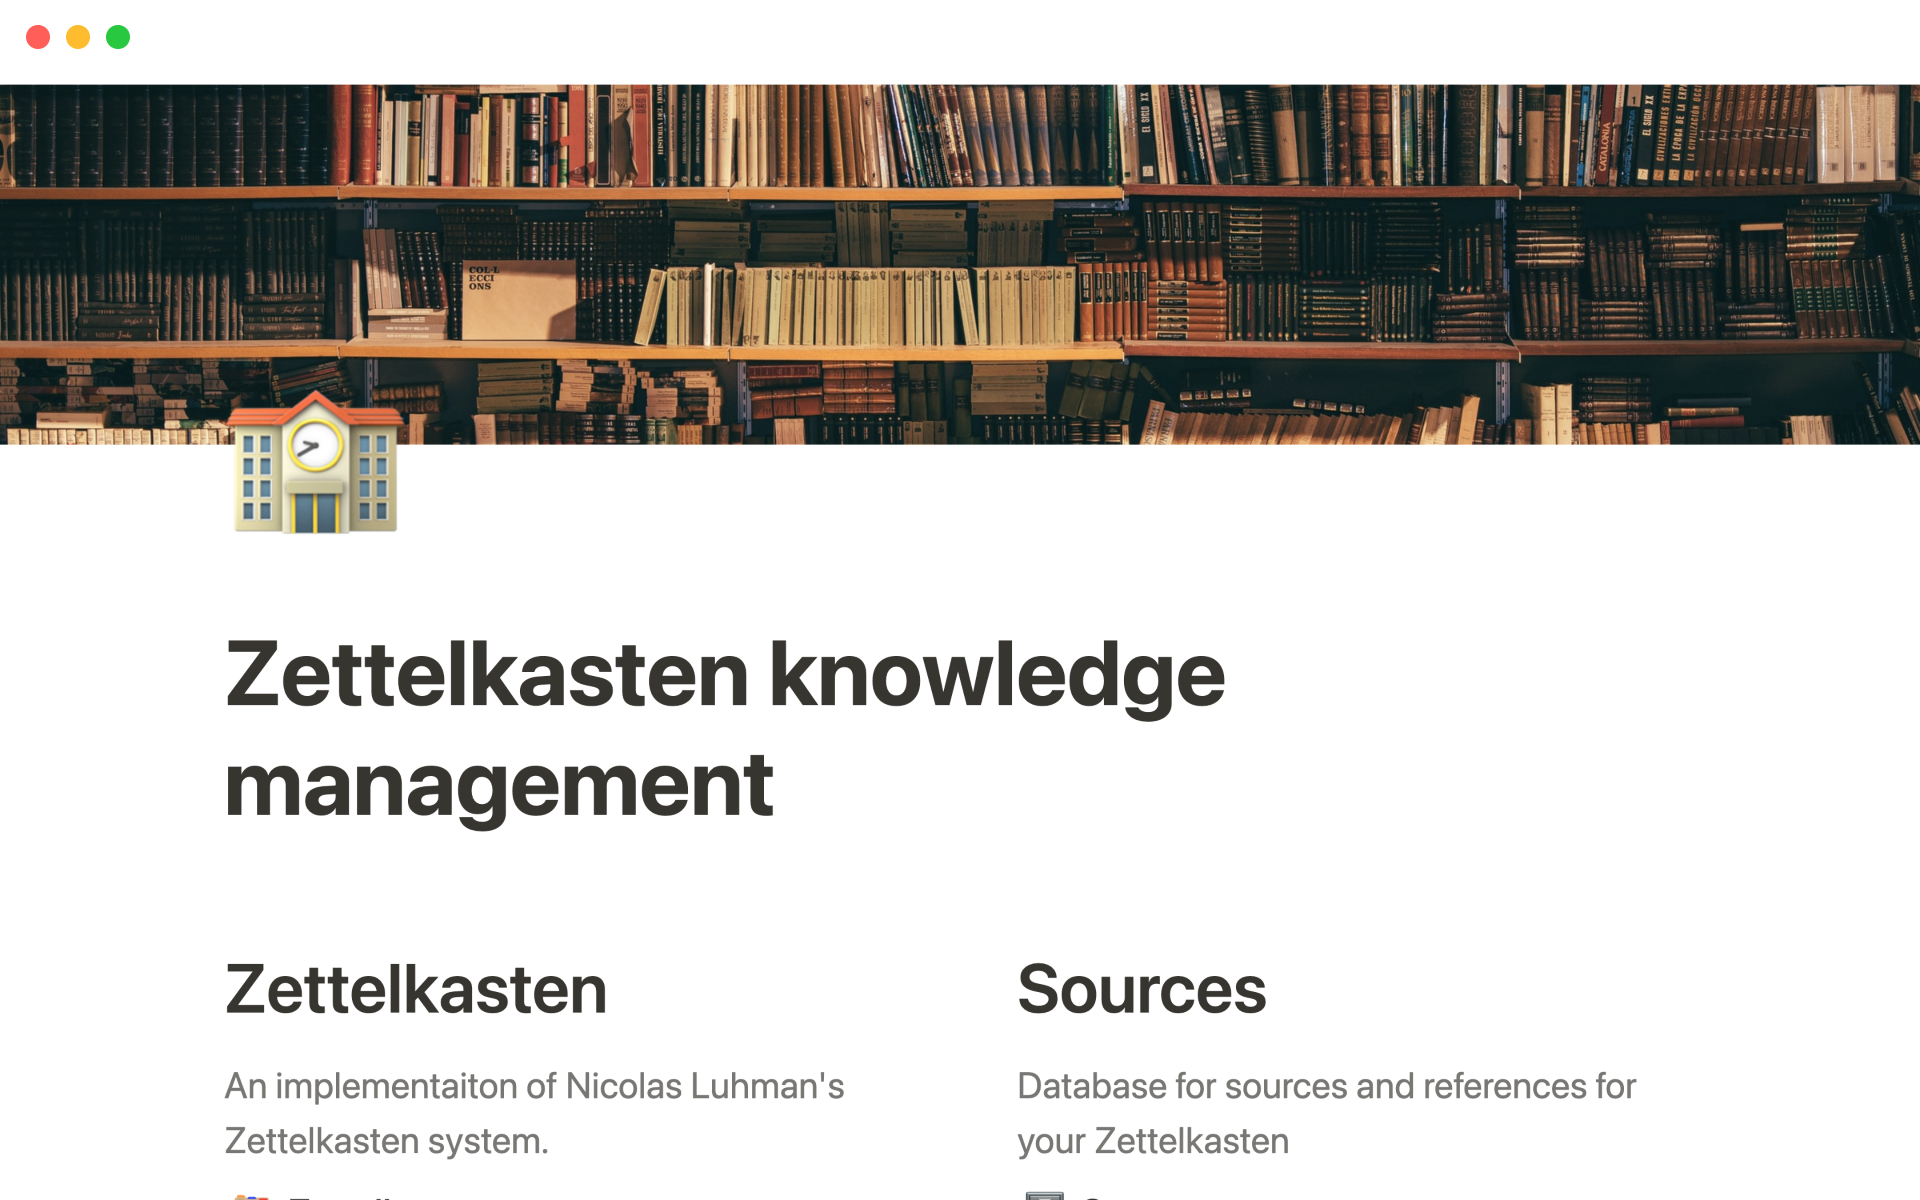 The desktop image for the Zettelkasten knowledge management template